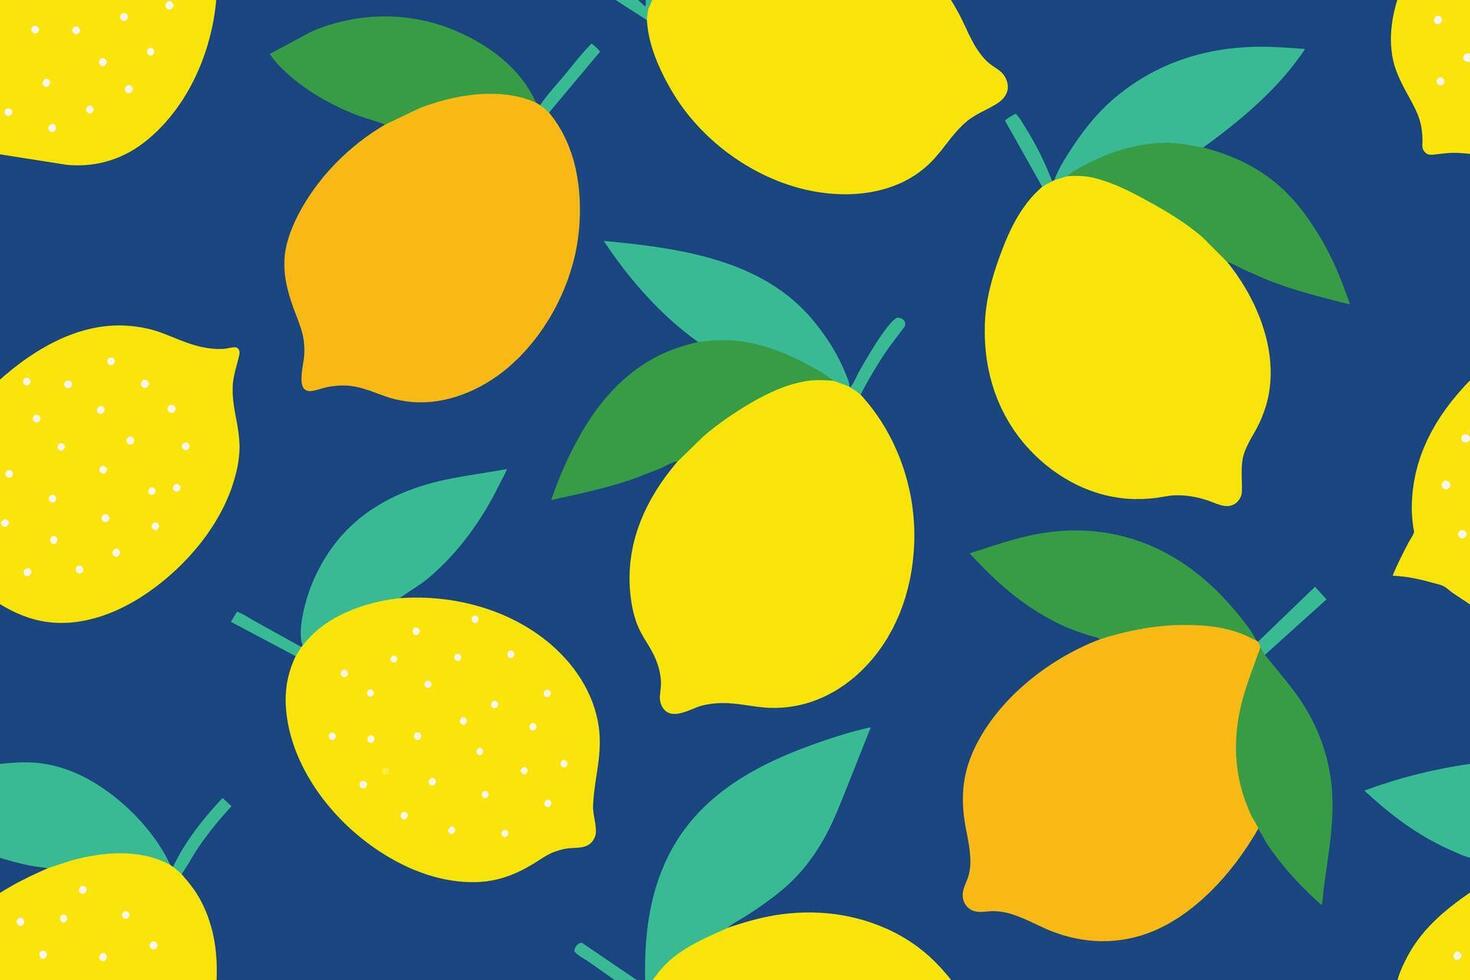 Lemon Pop Art Pattern Background vector